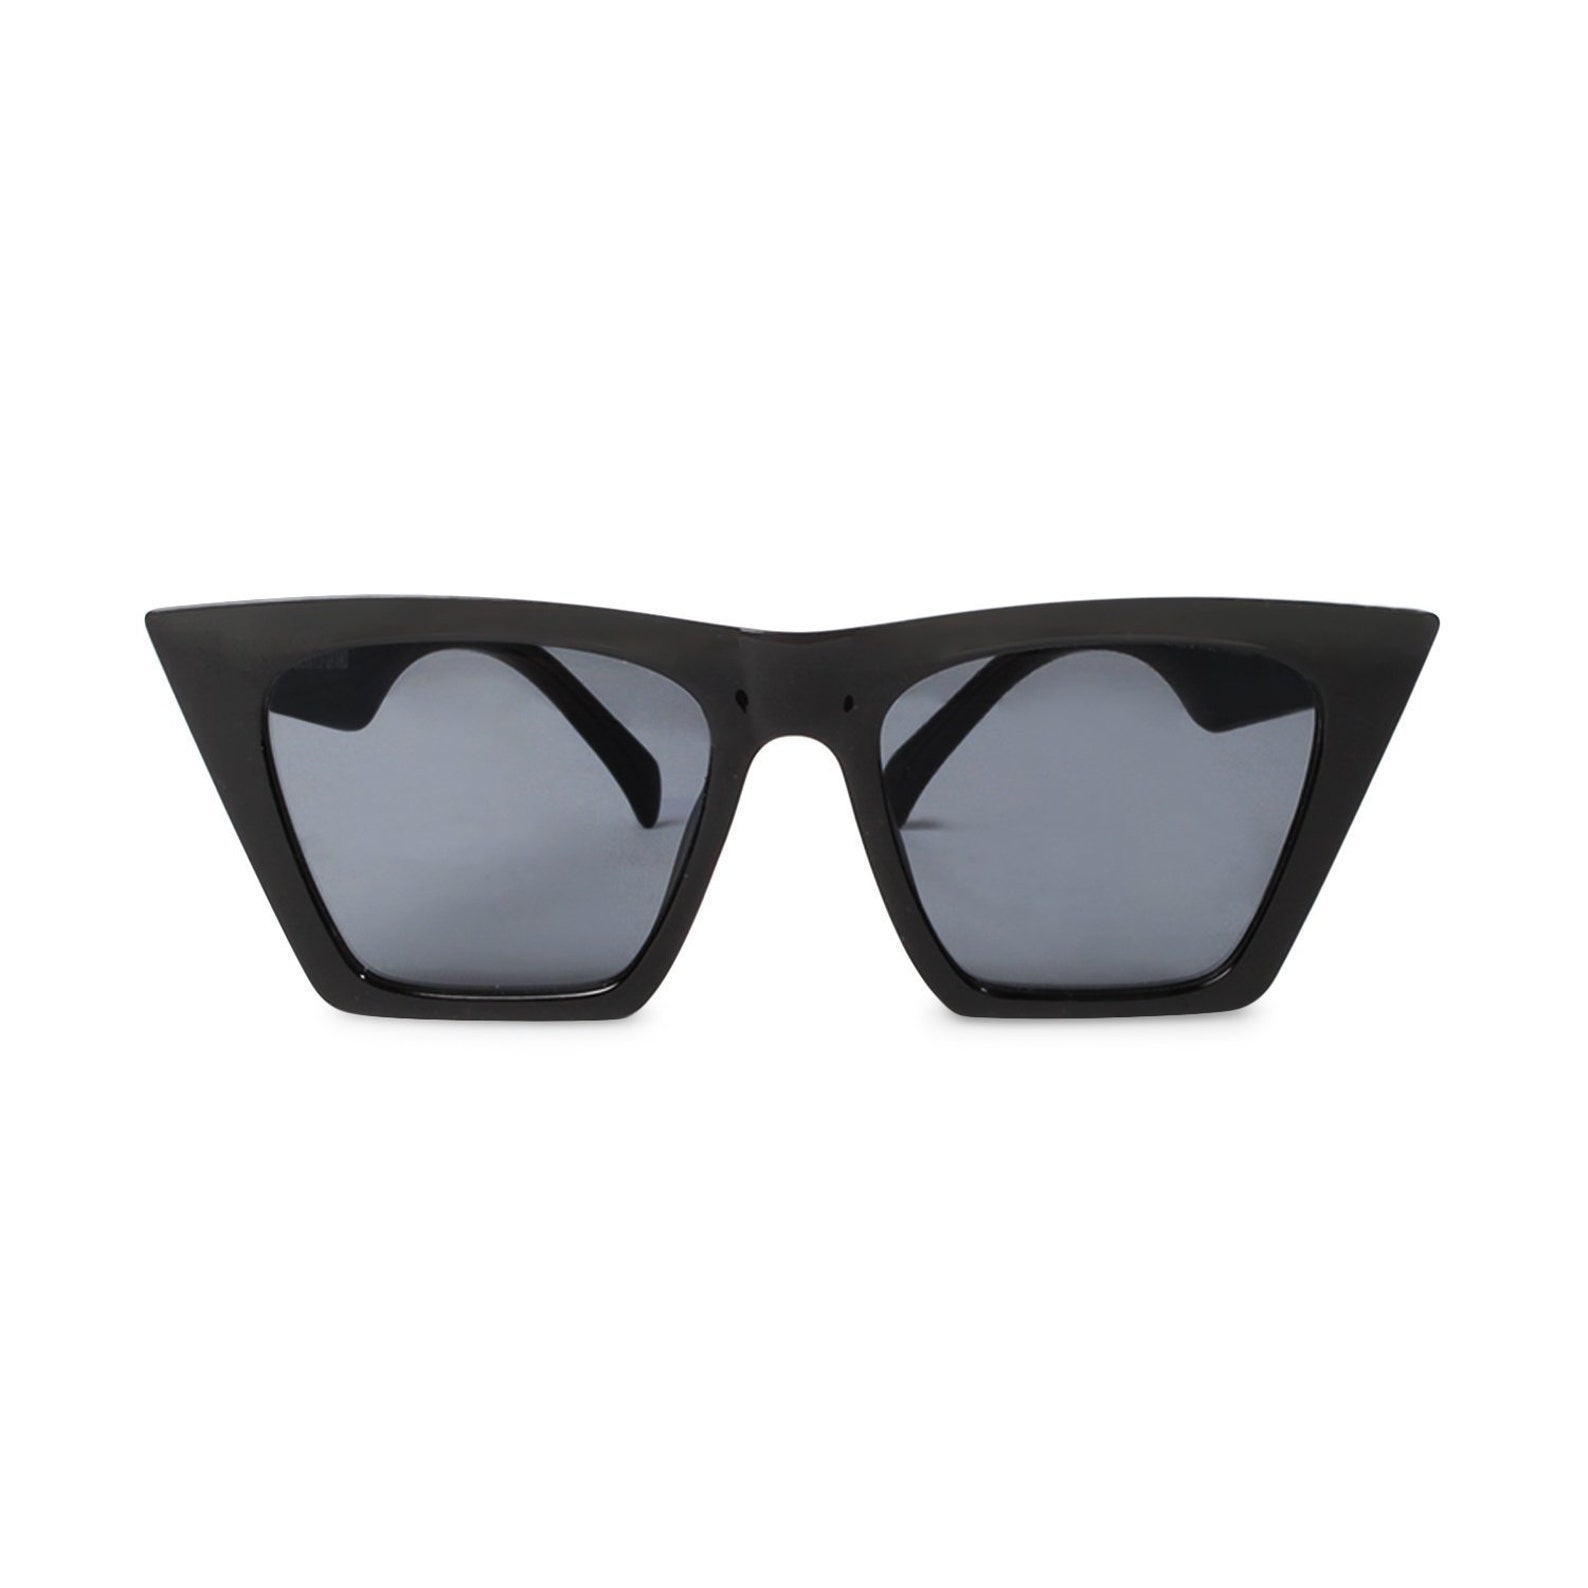 Square Cat Eye Sunglasses Retro Sunglasses Women | Etsy